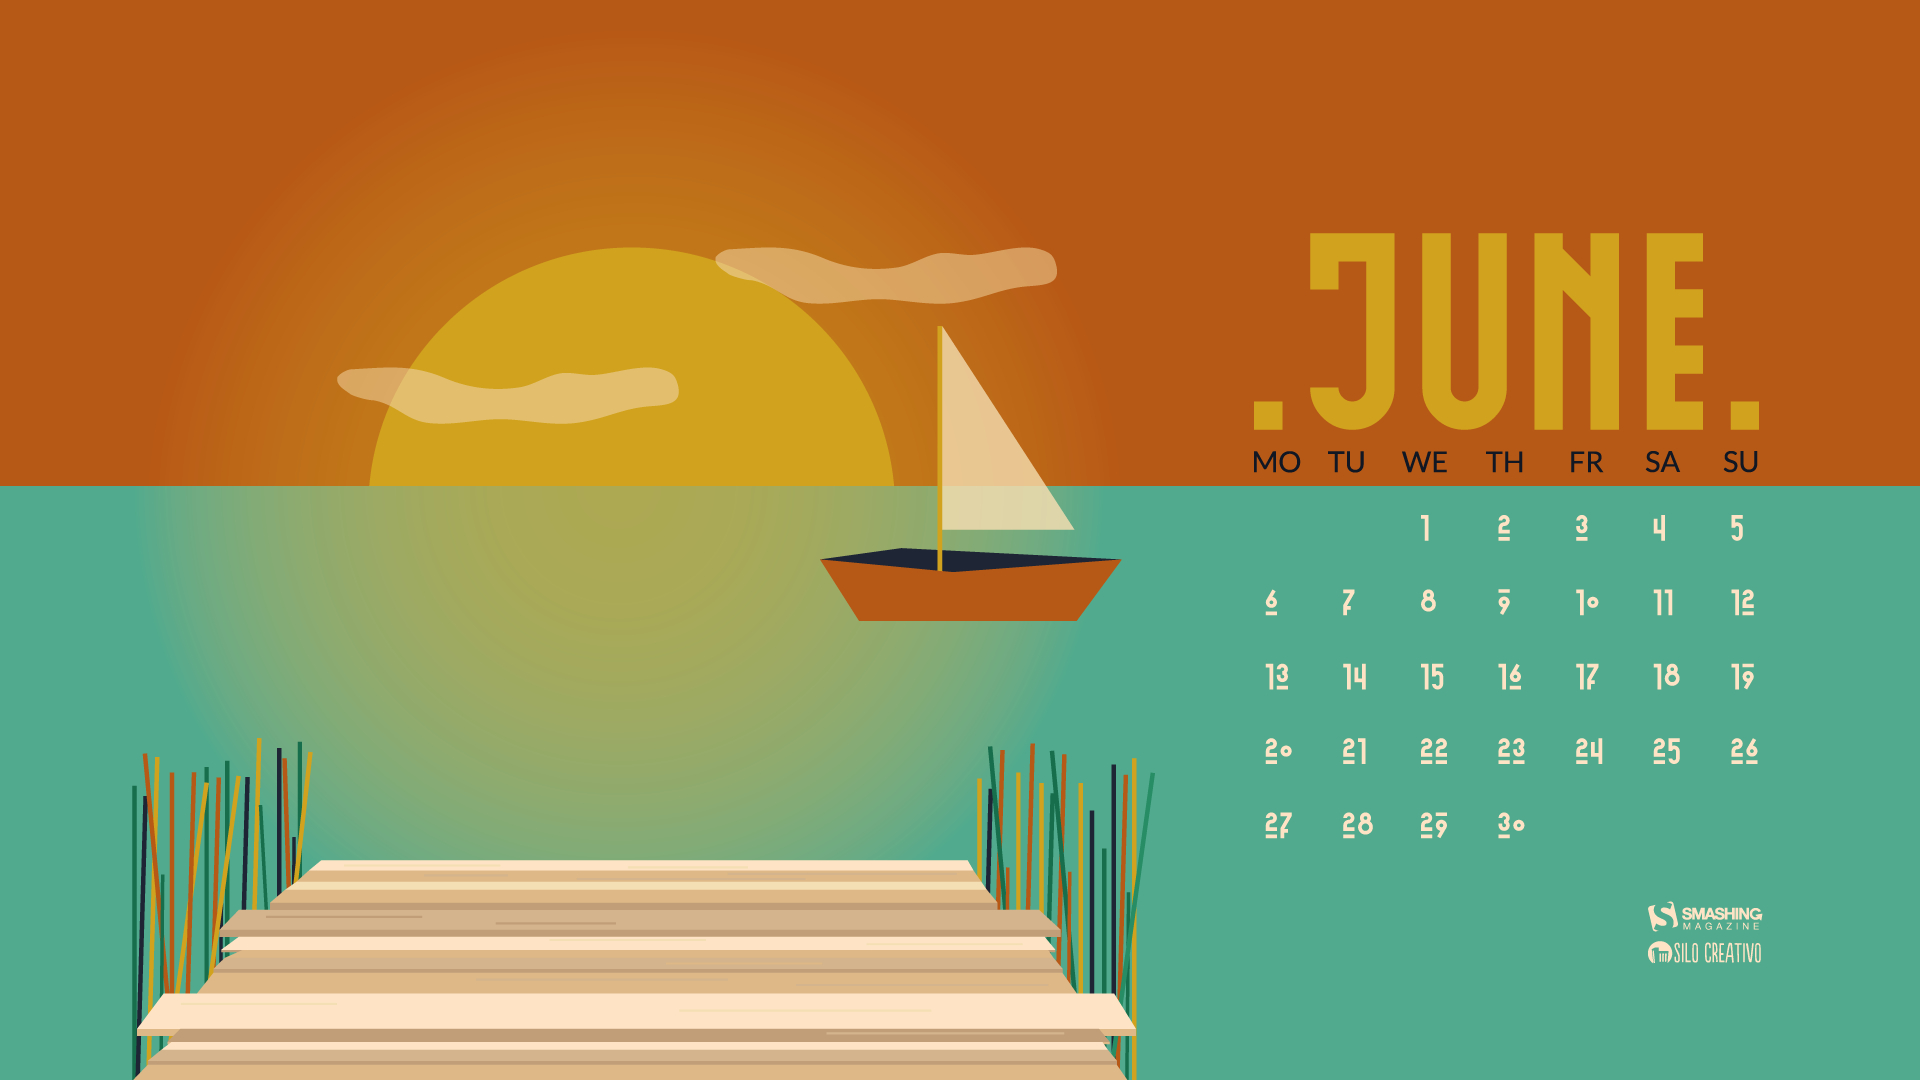 Desktop Wallpaper Calendar  Iunie 2016 Touchofadream with Calendar De Frumusete